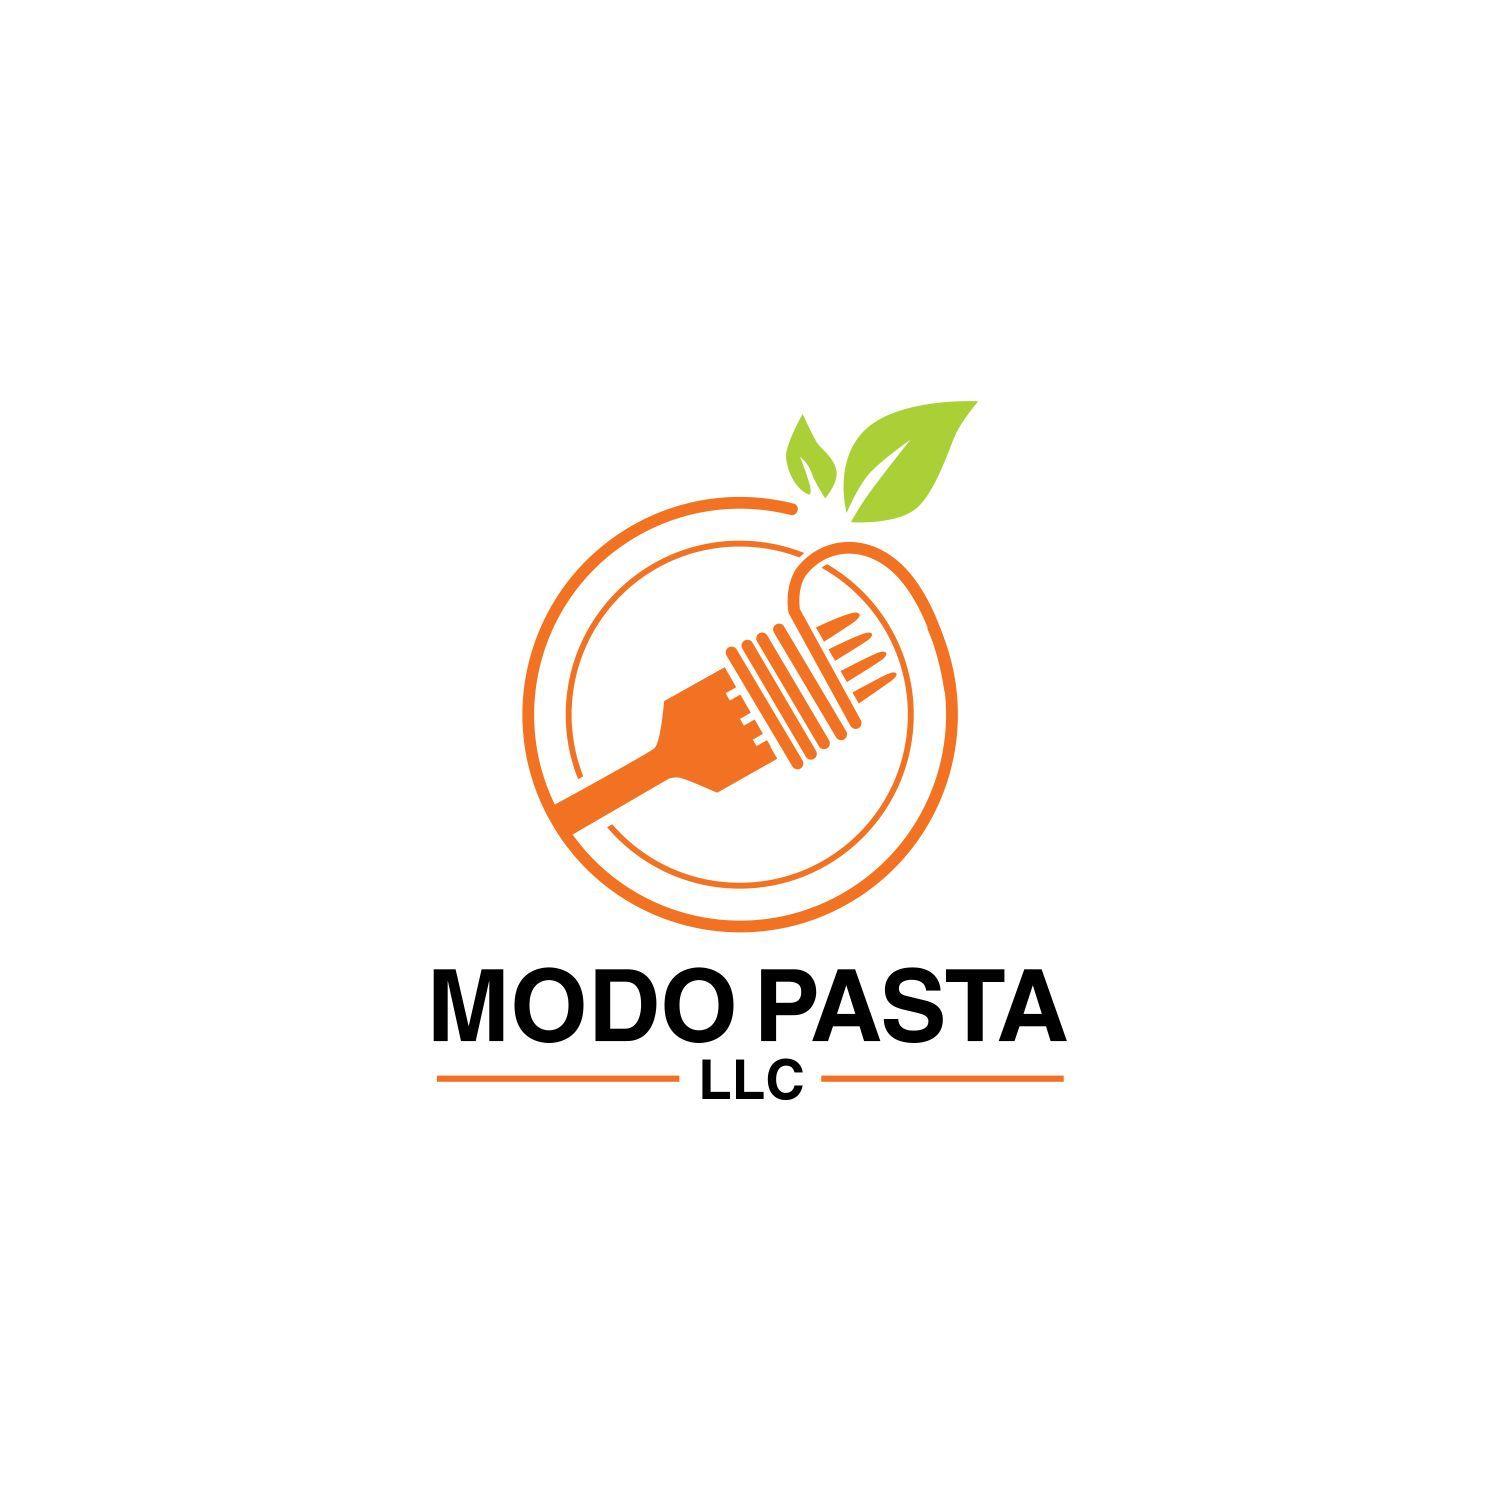 Pasta Logo - Bold, Modern, Fast Food Restaurant Logo Design for MODO PASTA llc ...